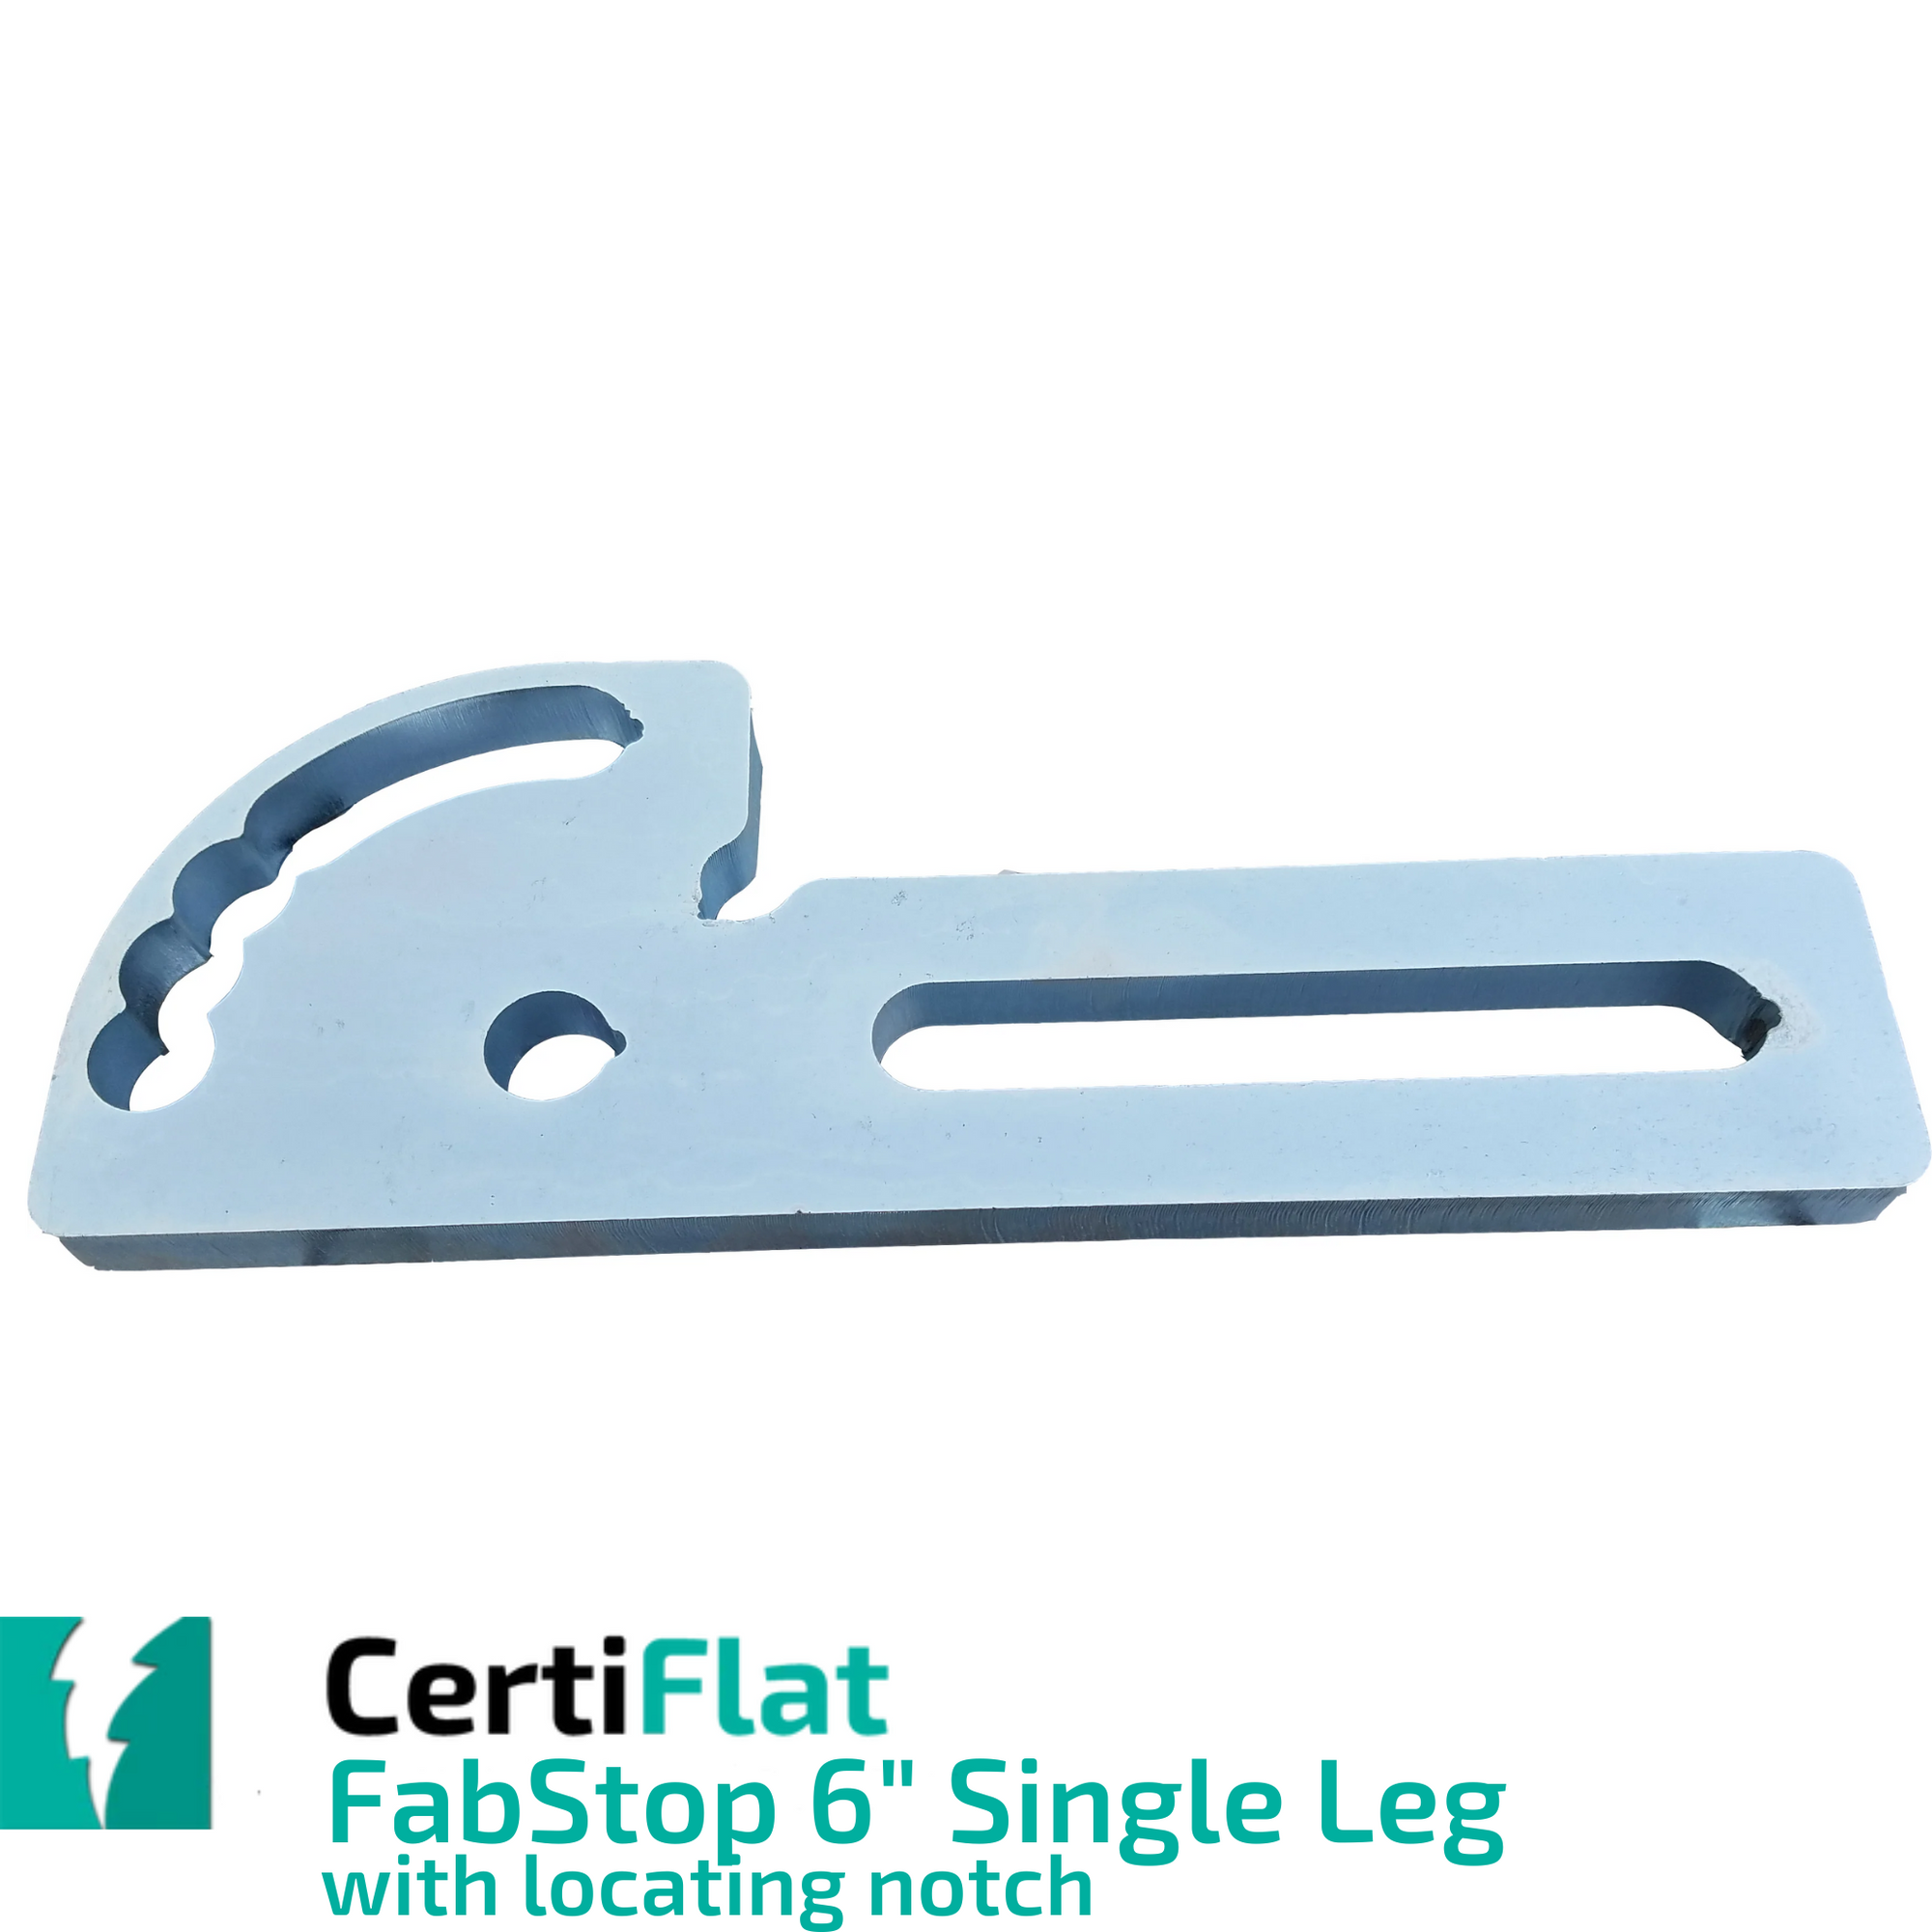 CertiFlat 6" Single Leg FabStop with Locating Notch